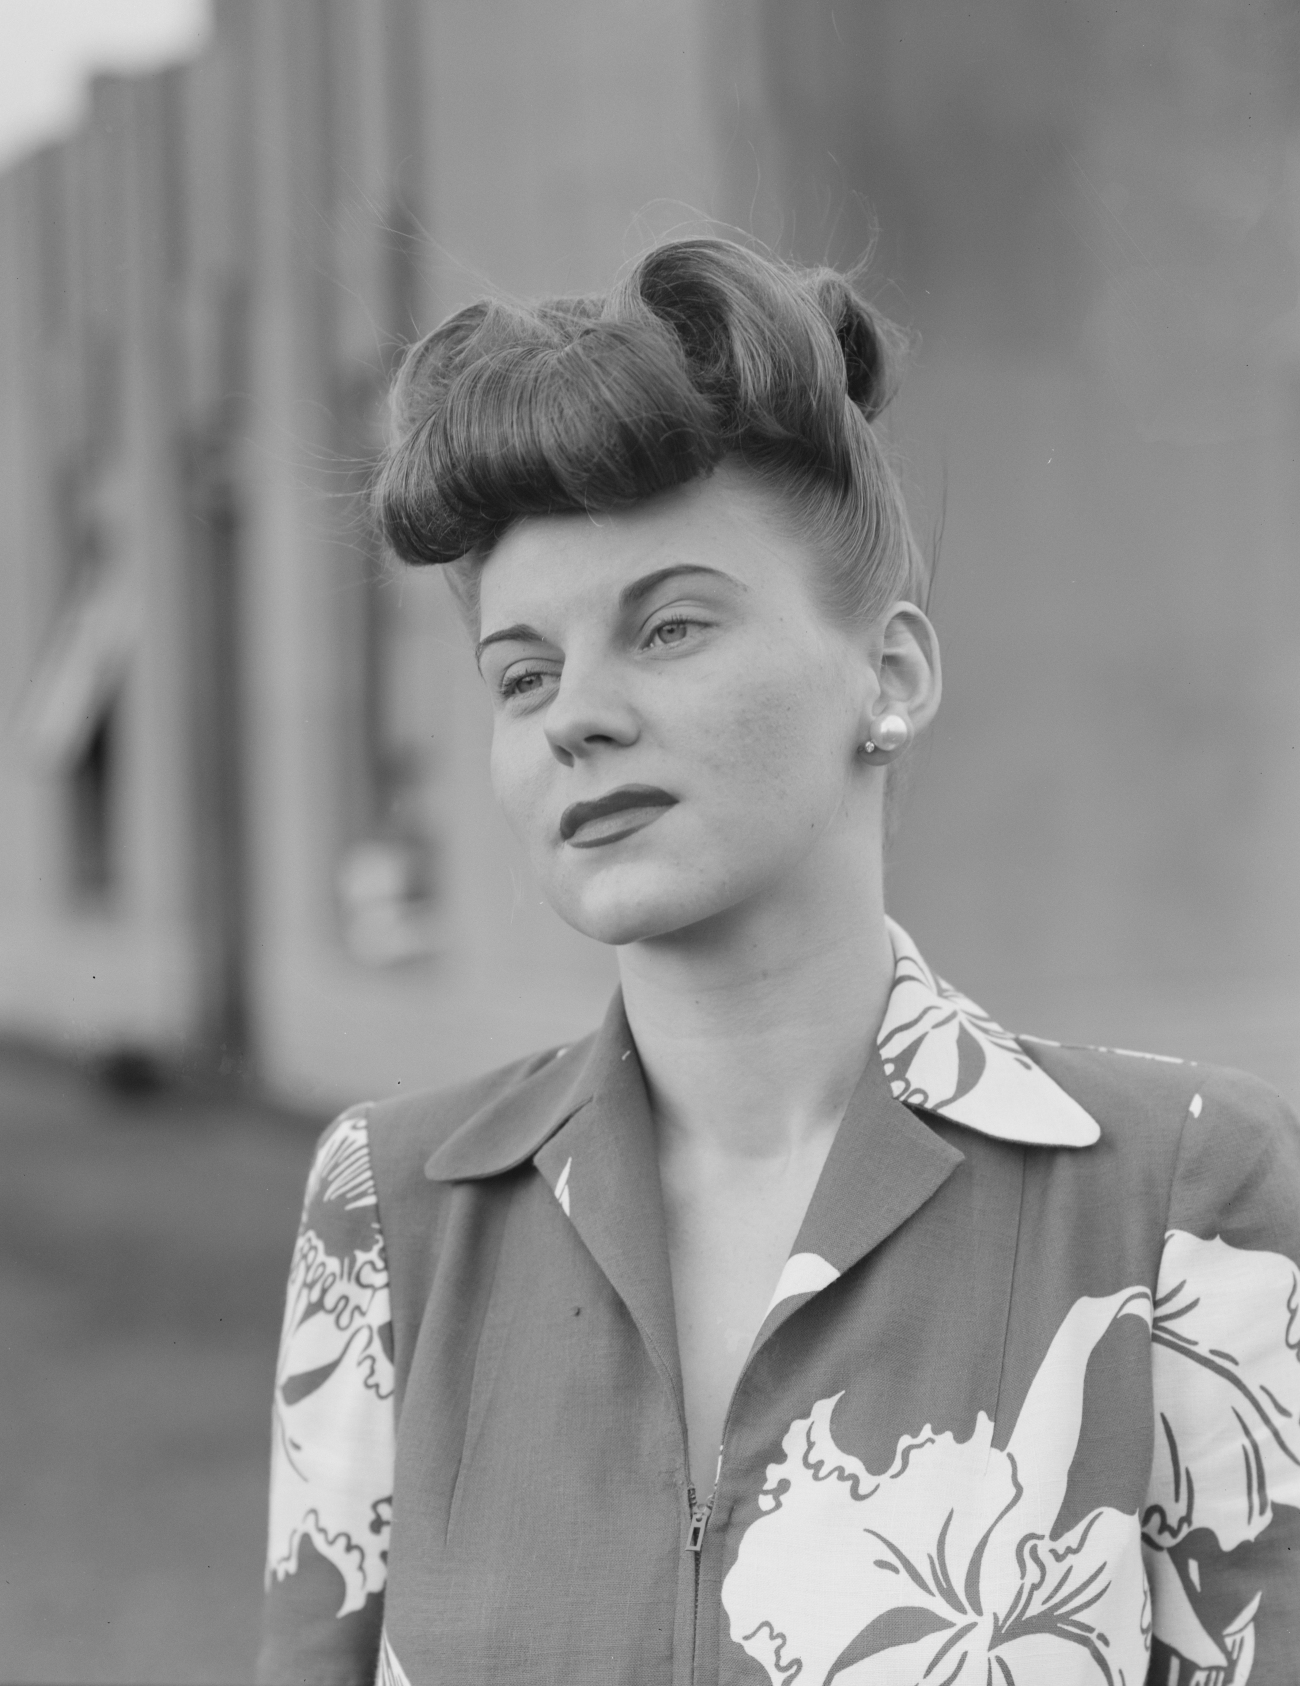 1942 fashion show model with big hair